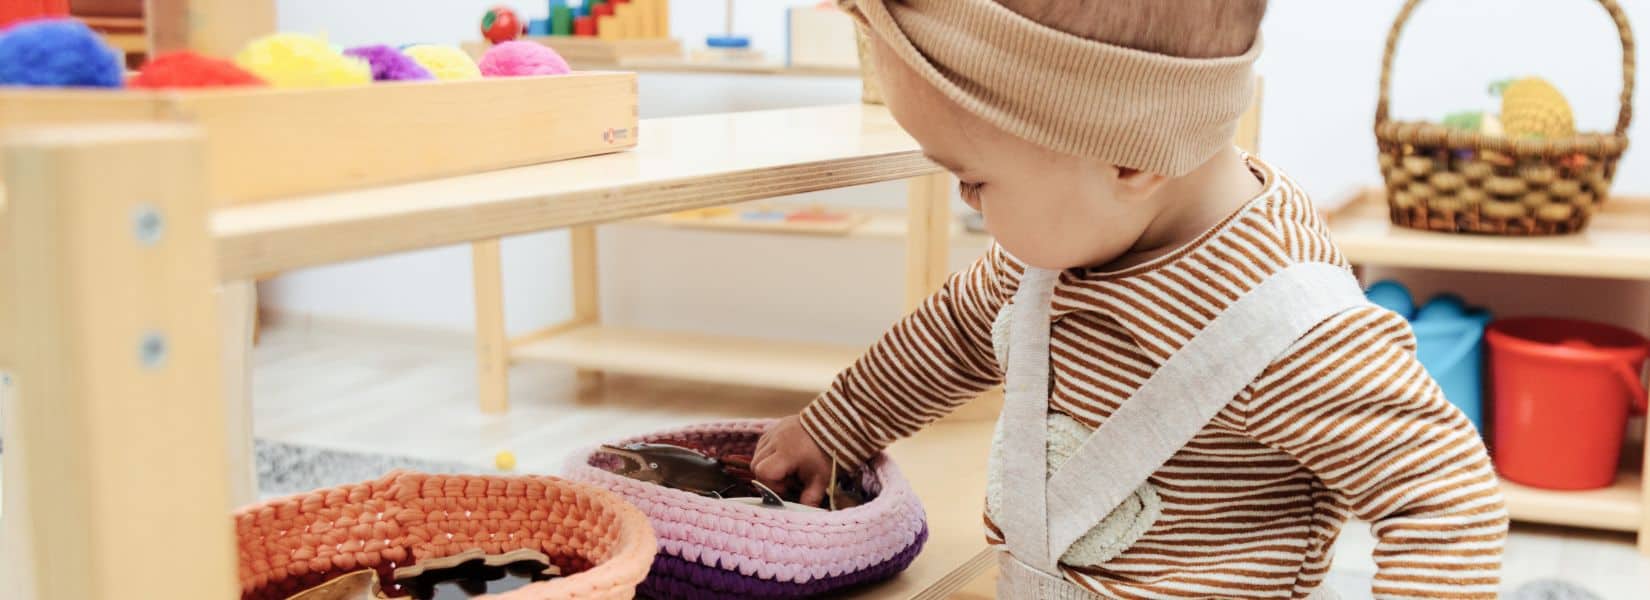 Montessori Storage Ideas: How to Organize Kids’ Toys in a Montessori-Inspired Way